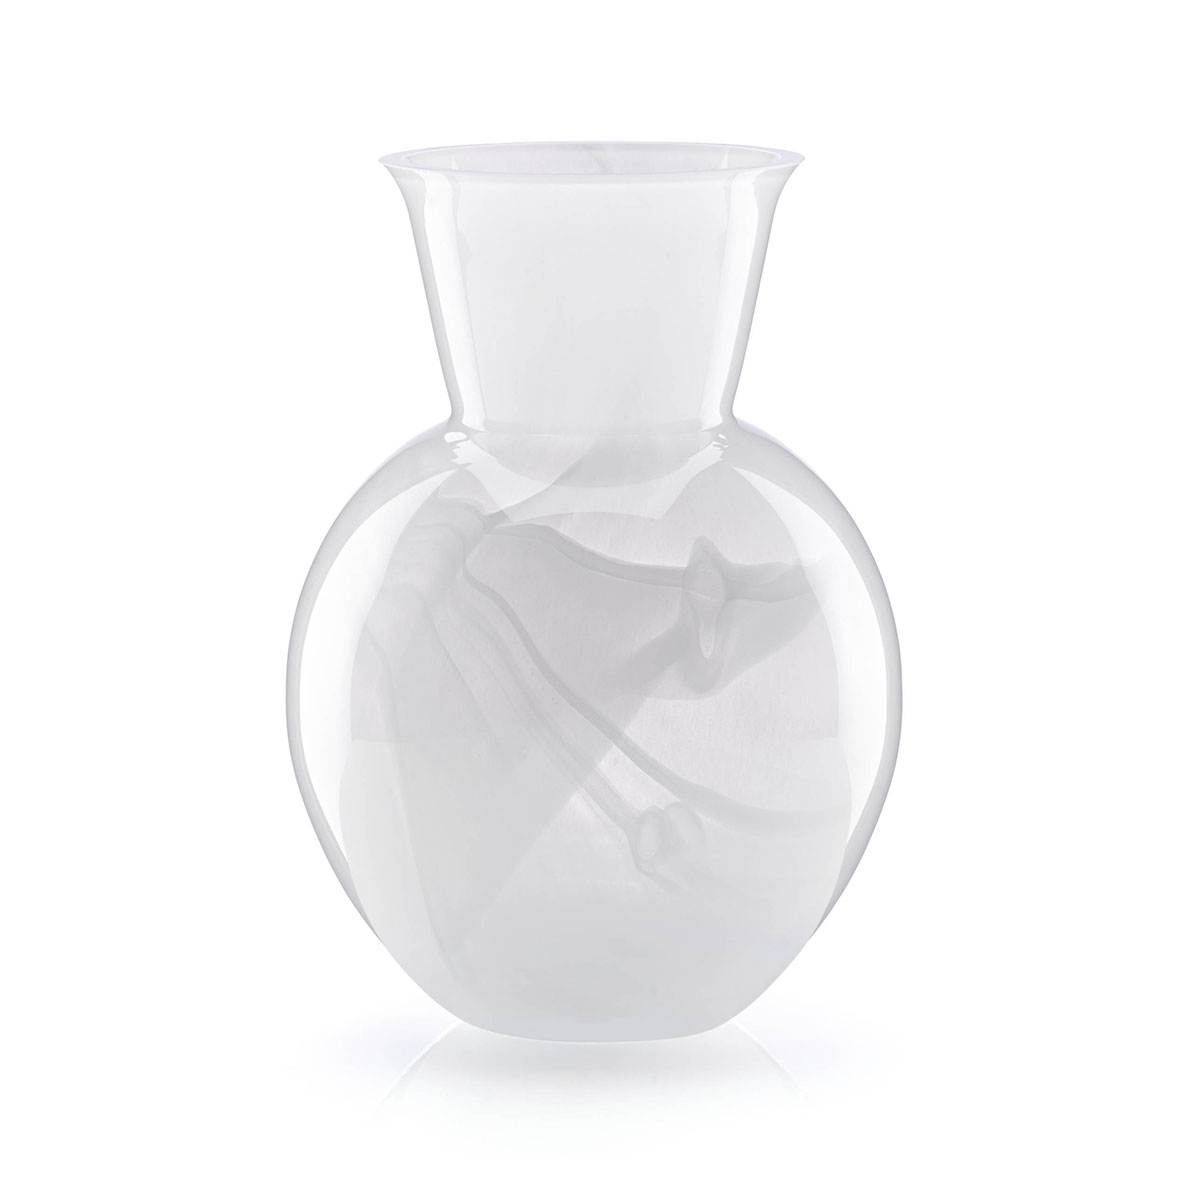 Kate Spade New York, Lenox Prospect Place Large Crystal Vase